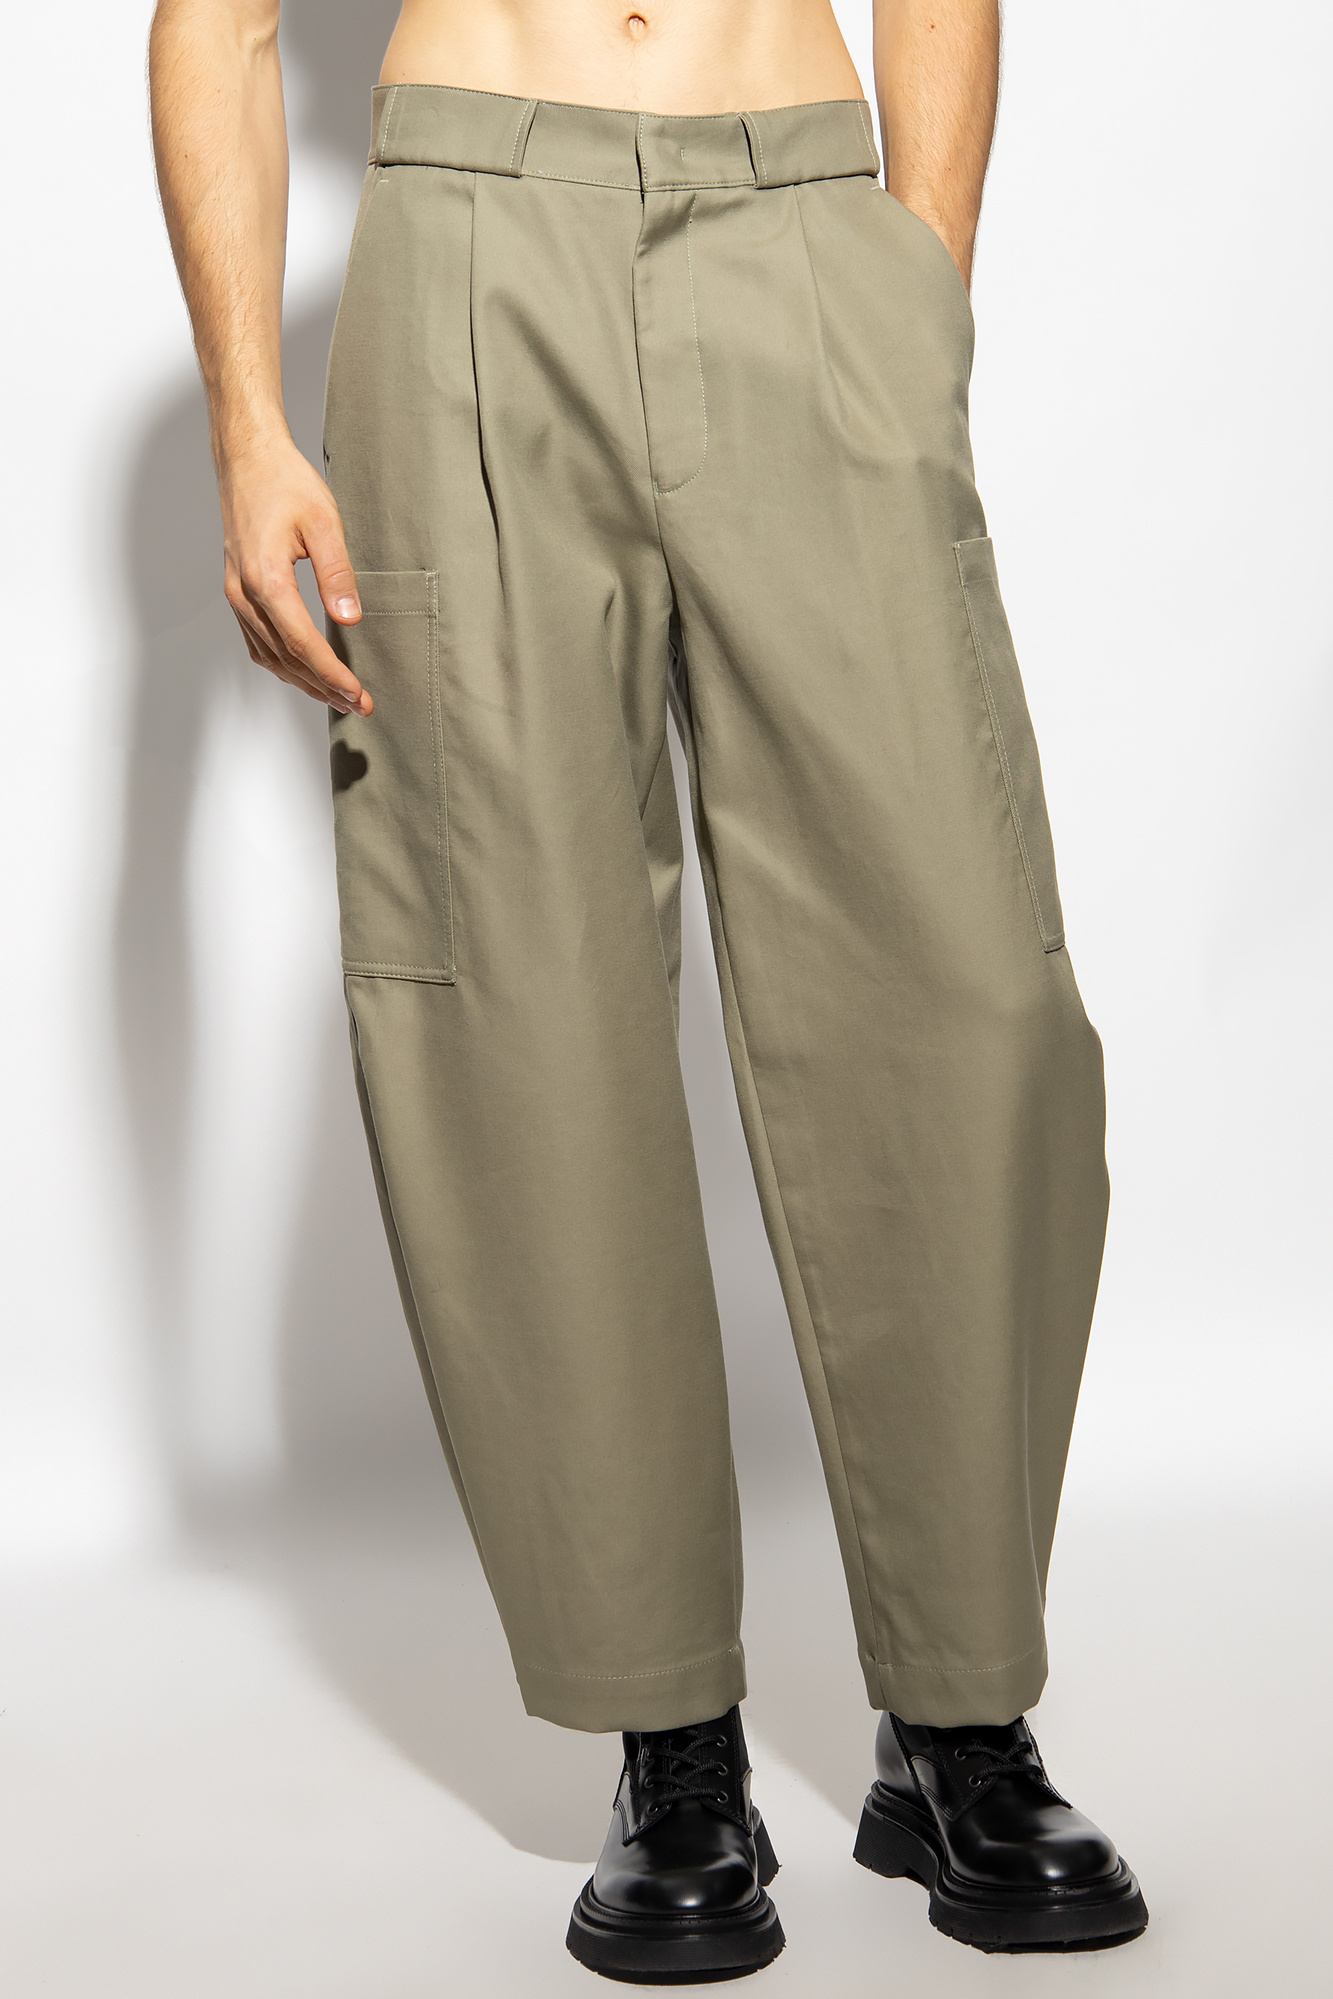 Emporio Armani Cotton loose-fitting trousers